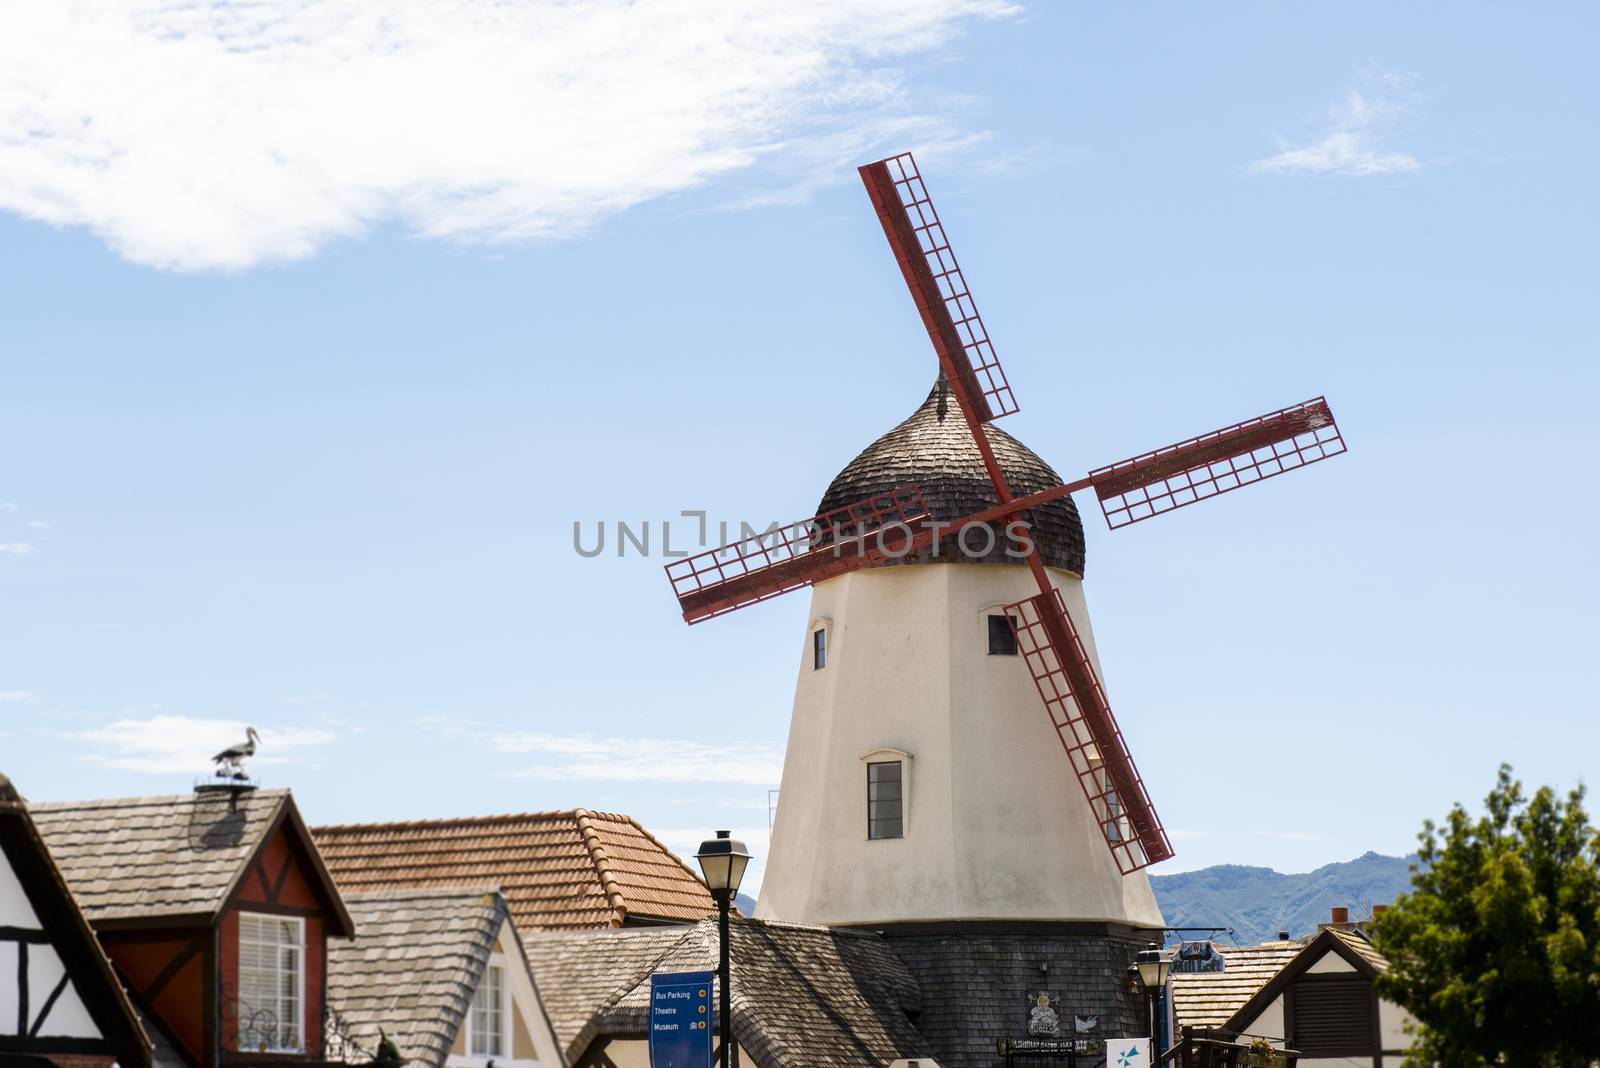 Windmill in Solvang, CA